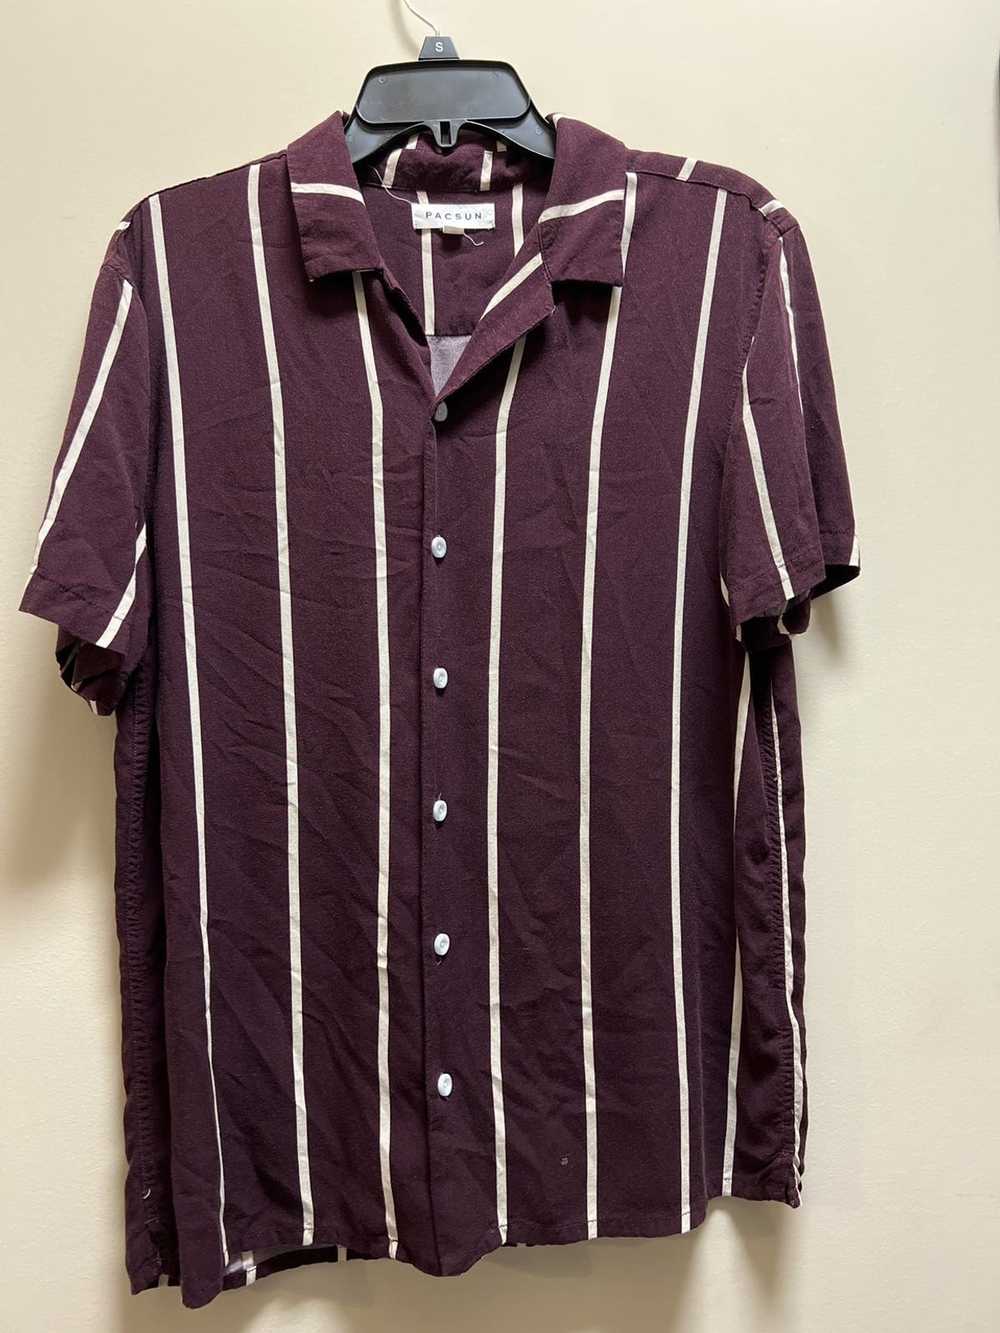 Pacsun PacSun Burgundy Striped Shirt - image 1